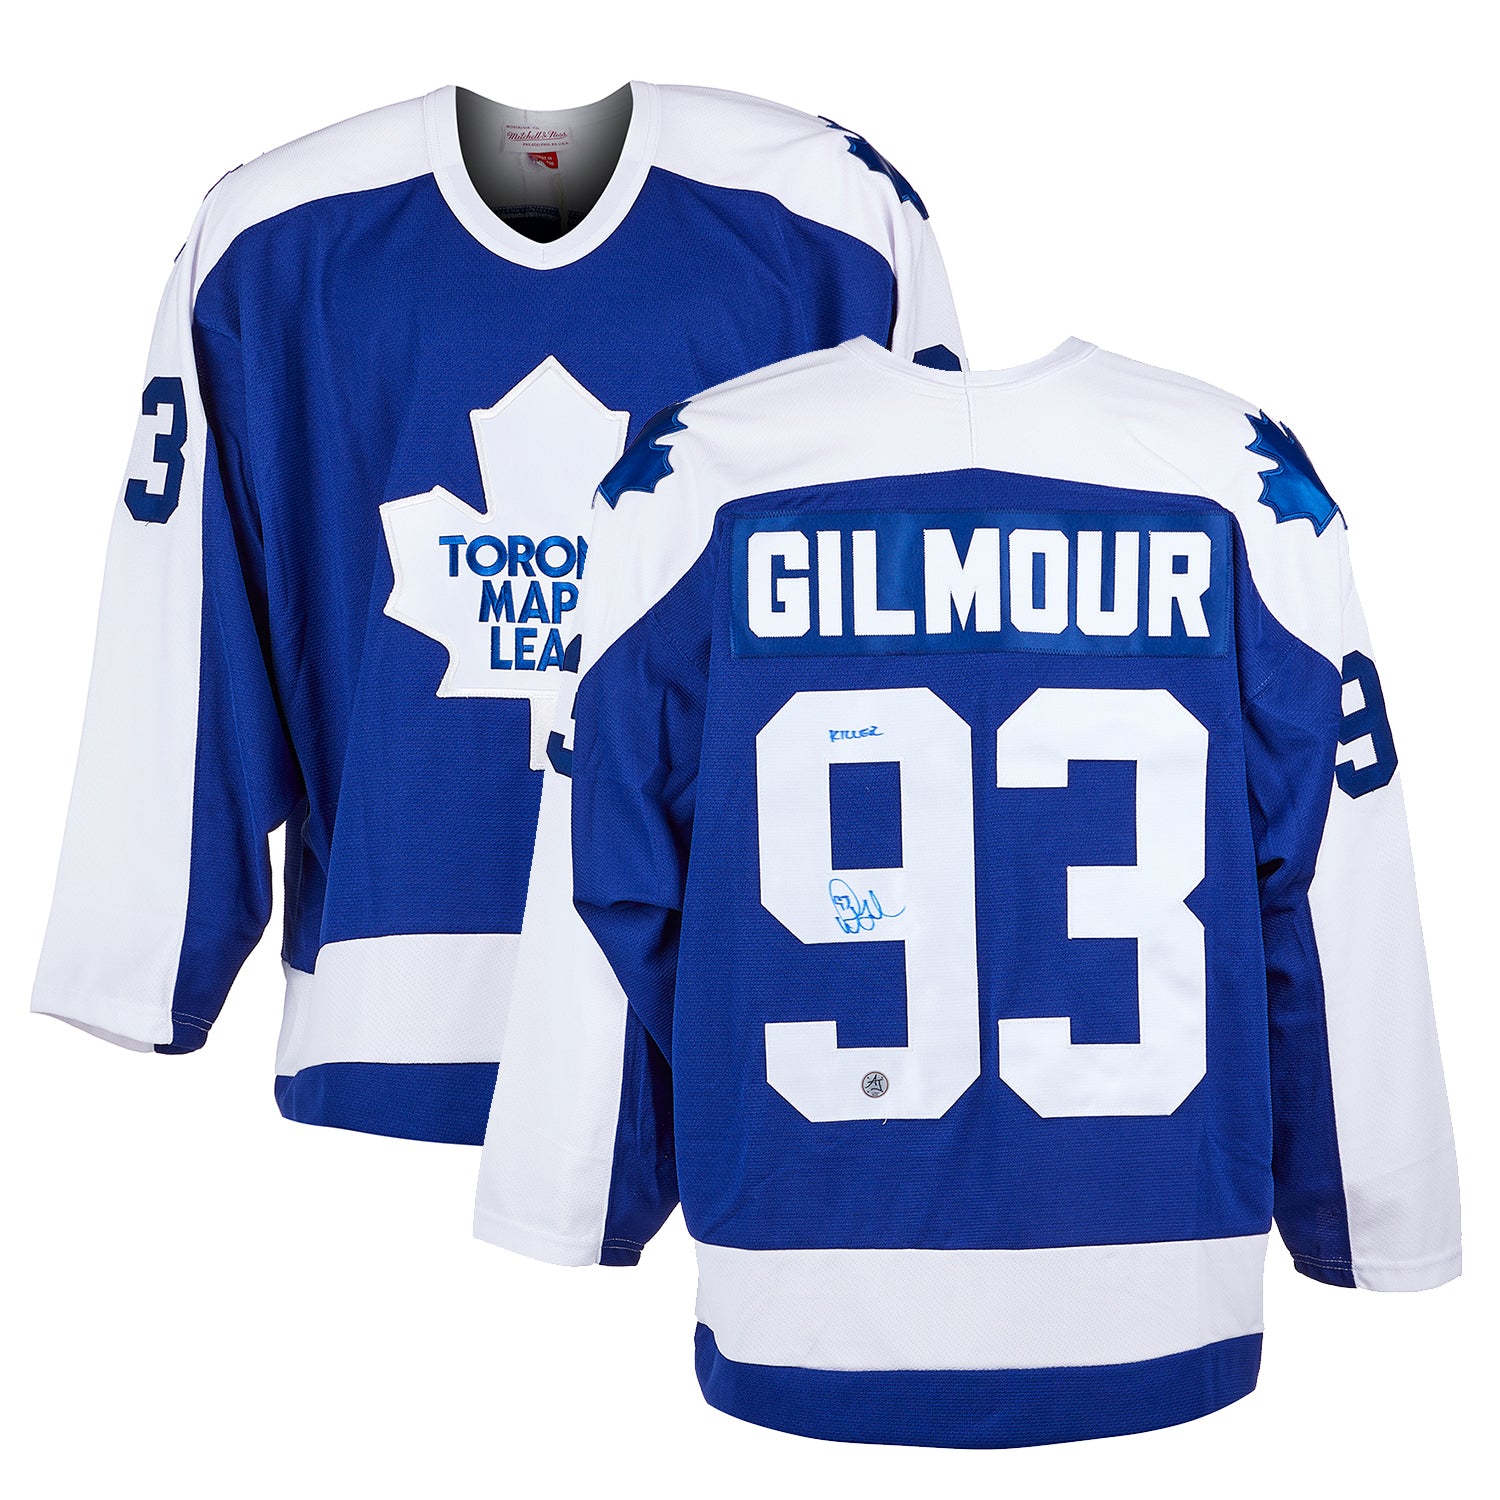 Doug Gilmour Signed Toronto Maple Leafs Retro Mitchell & Ness Jersey